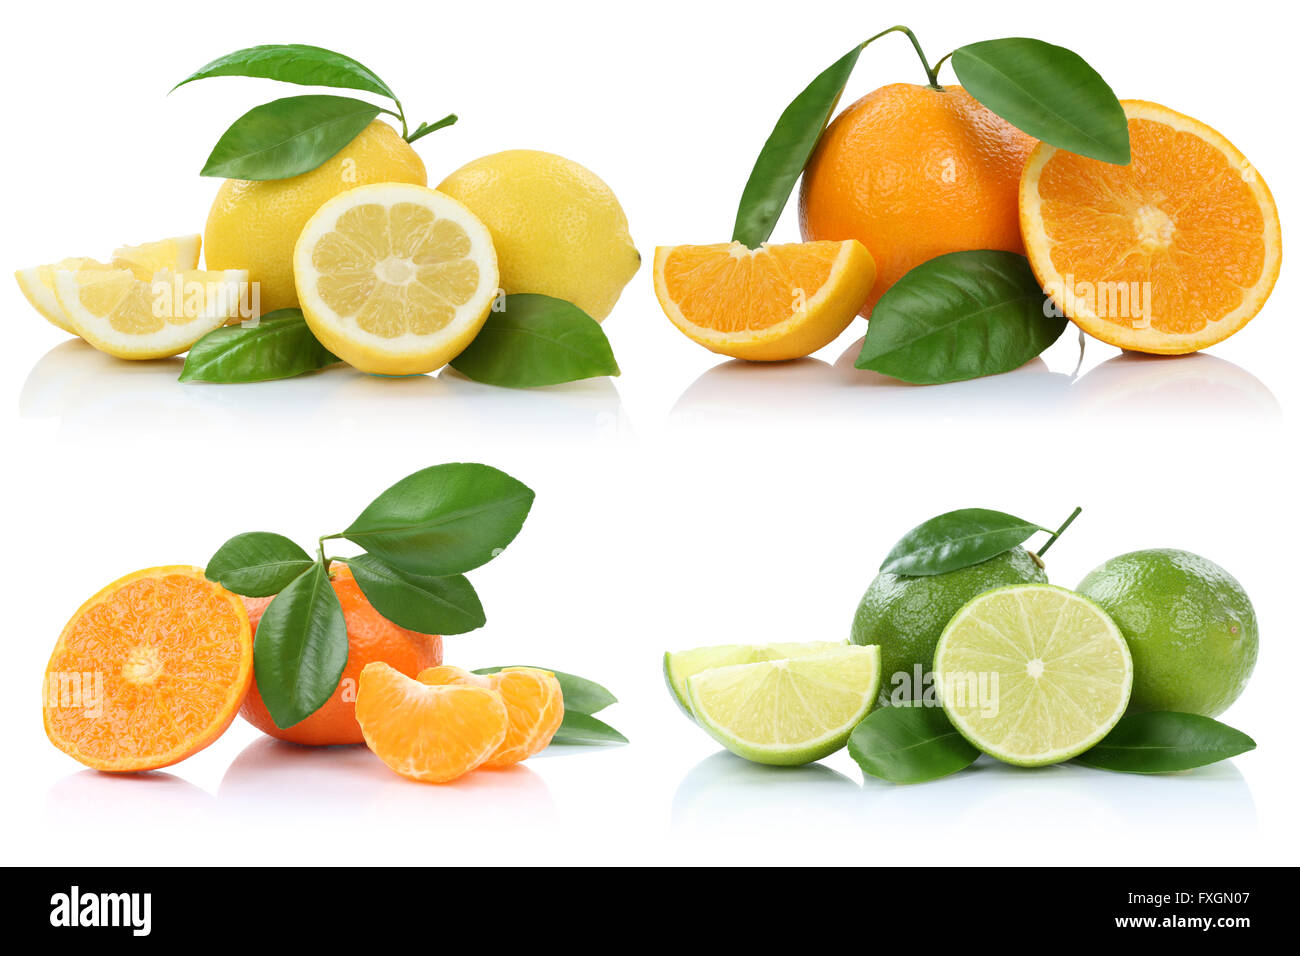 Collection of oranges mandarins lemons fruits isolated on a white background Stock Photo